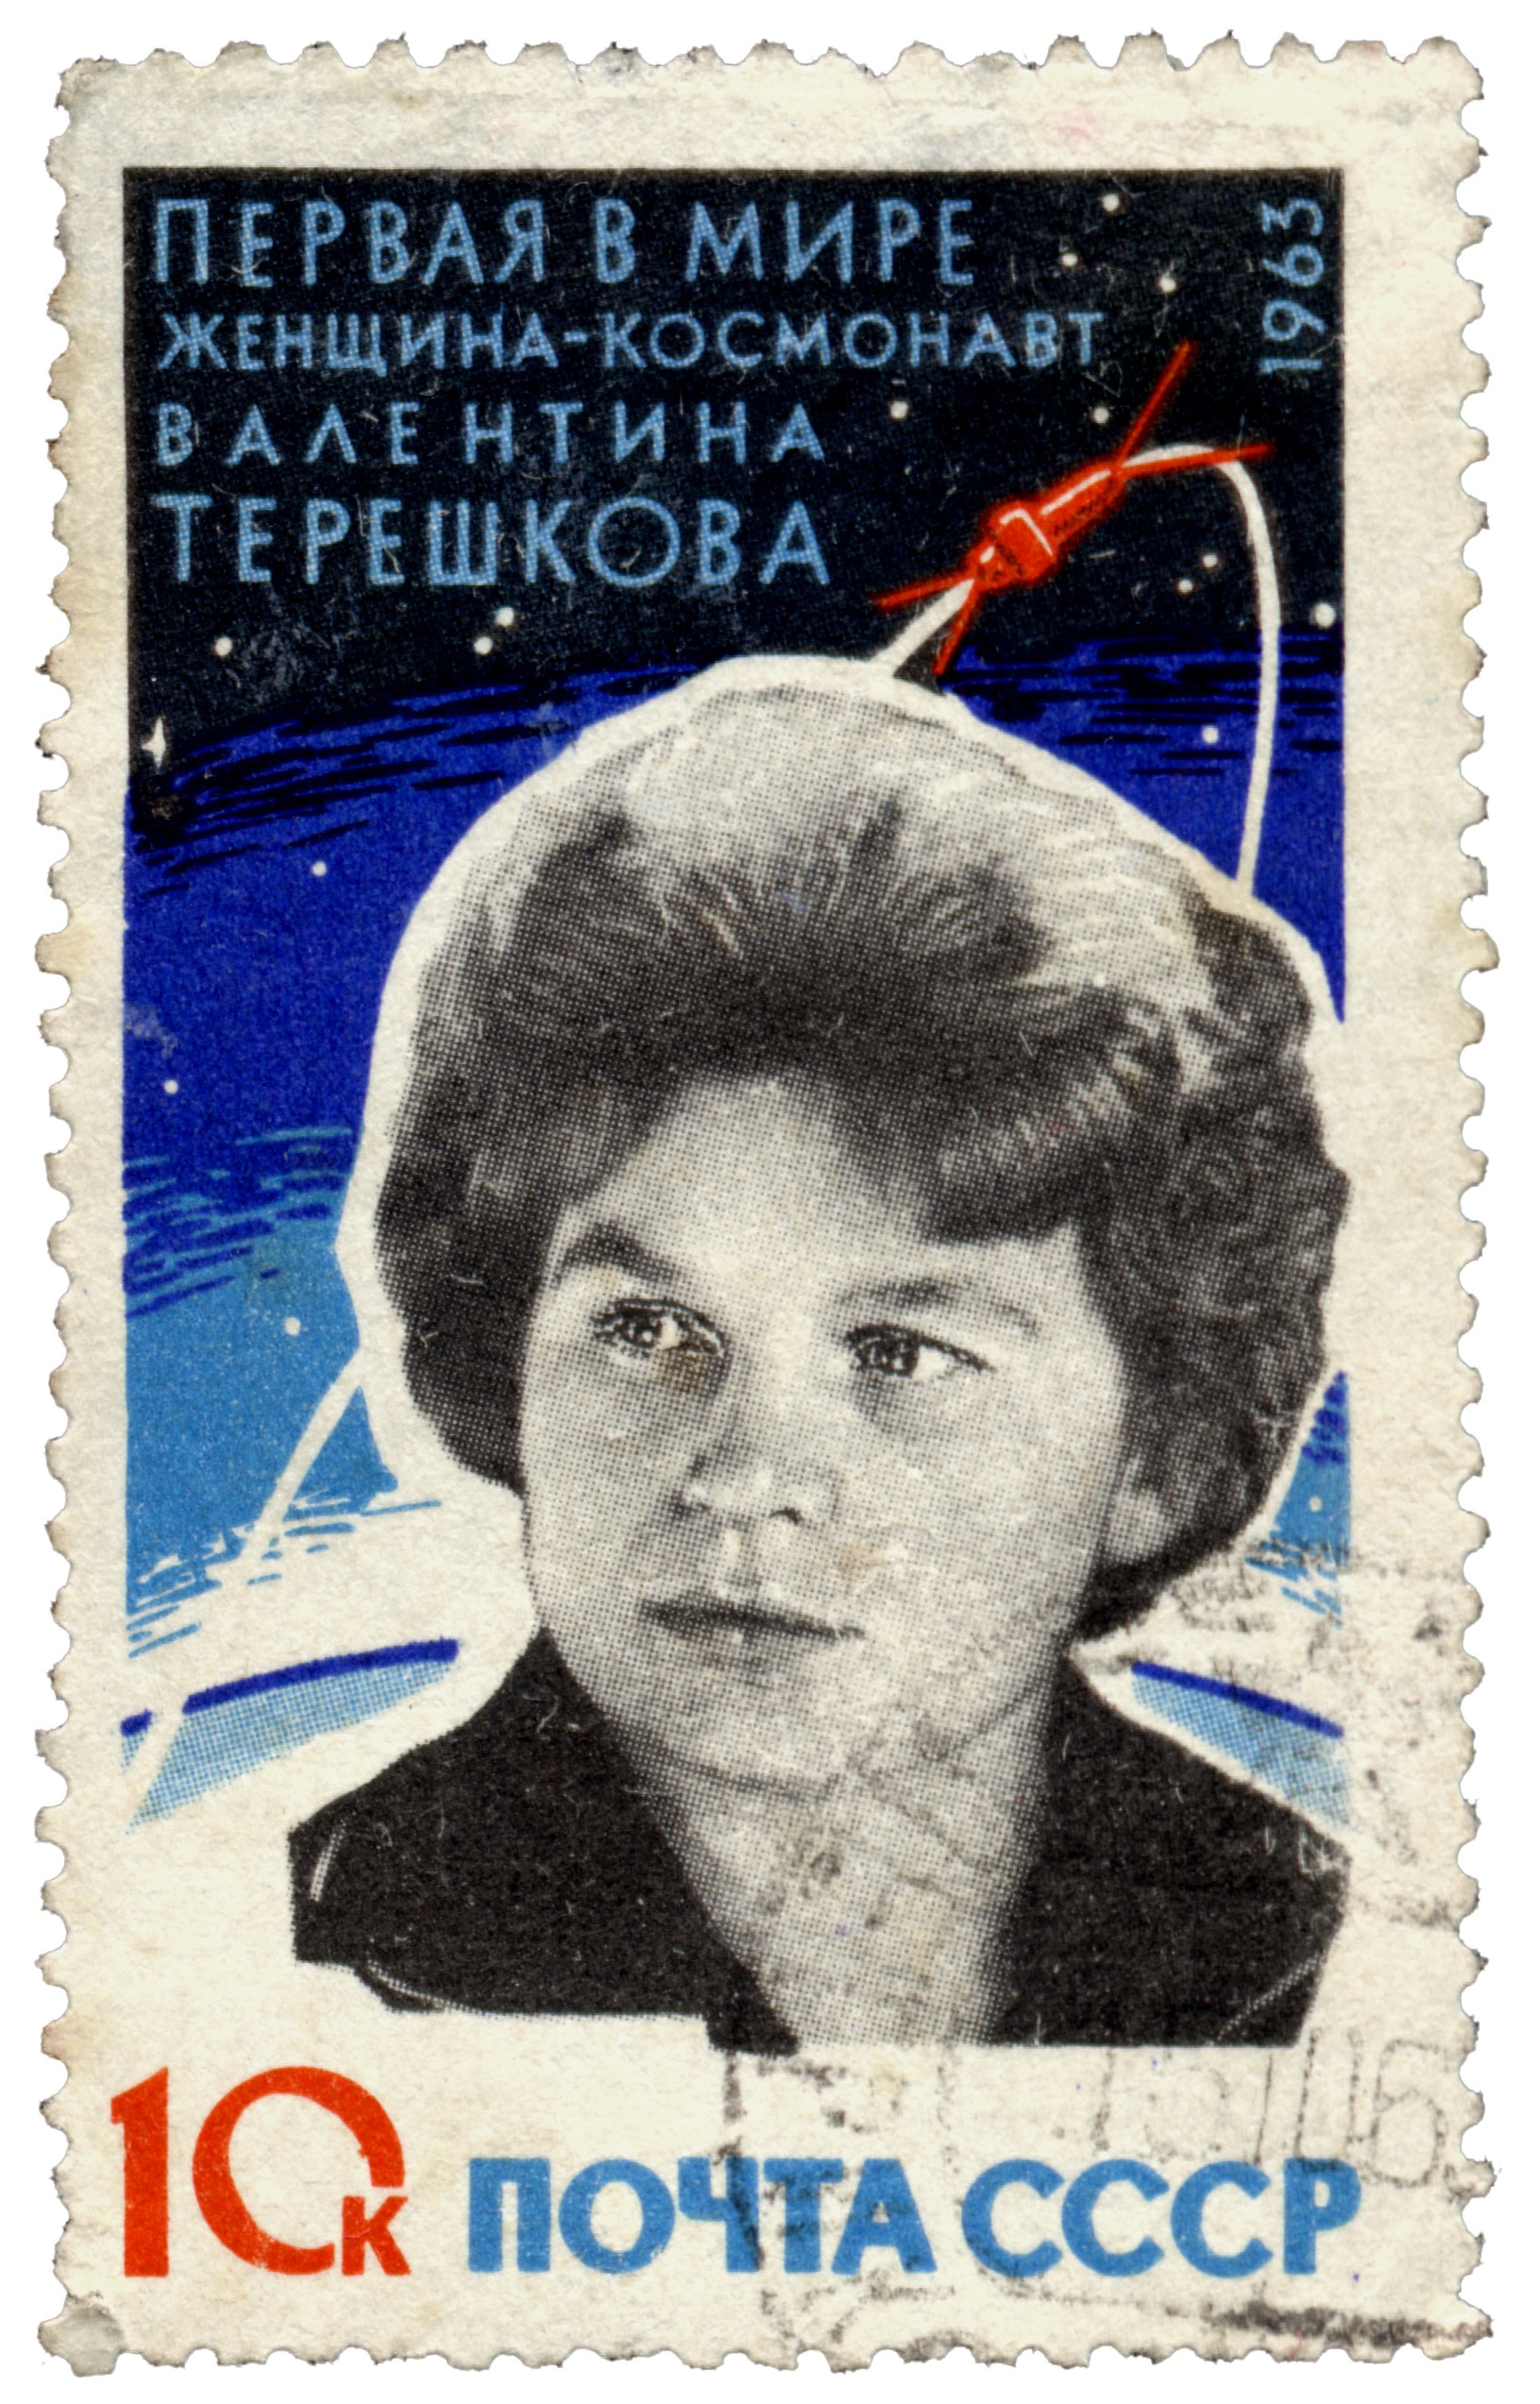 Selo soviético em homenagem à Valentina Tereshkova (Foto: Wikimedia Commons)